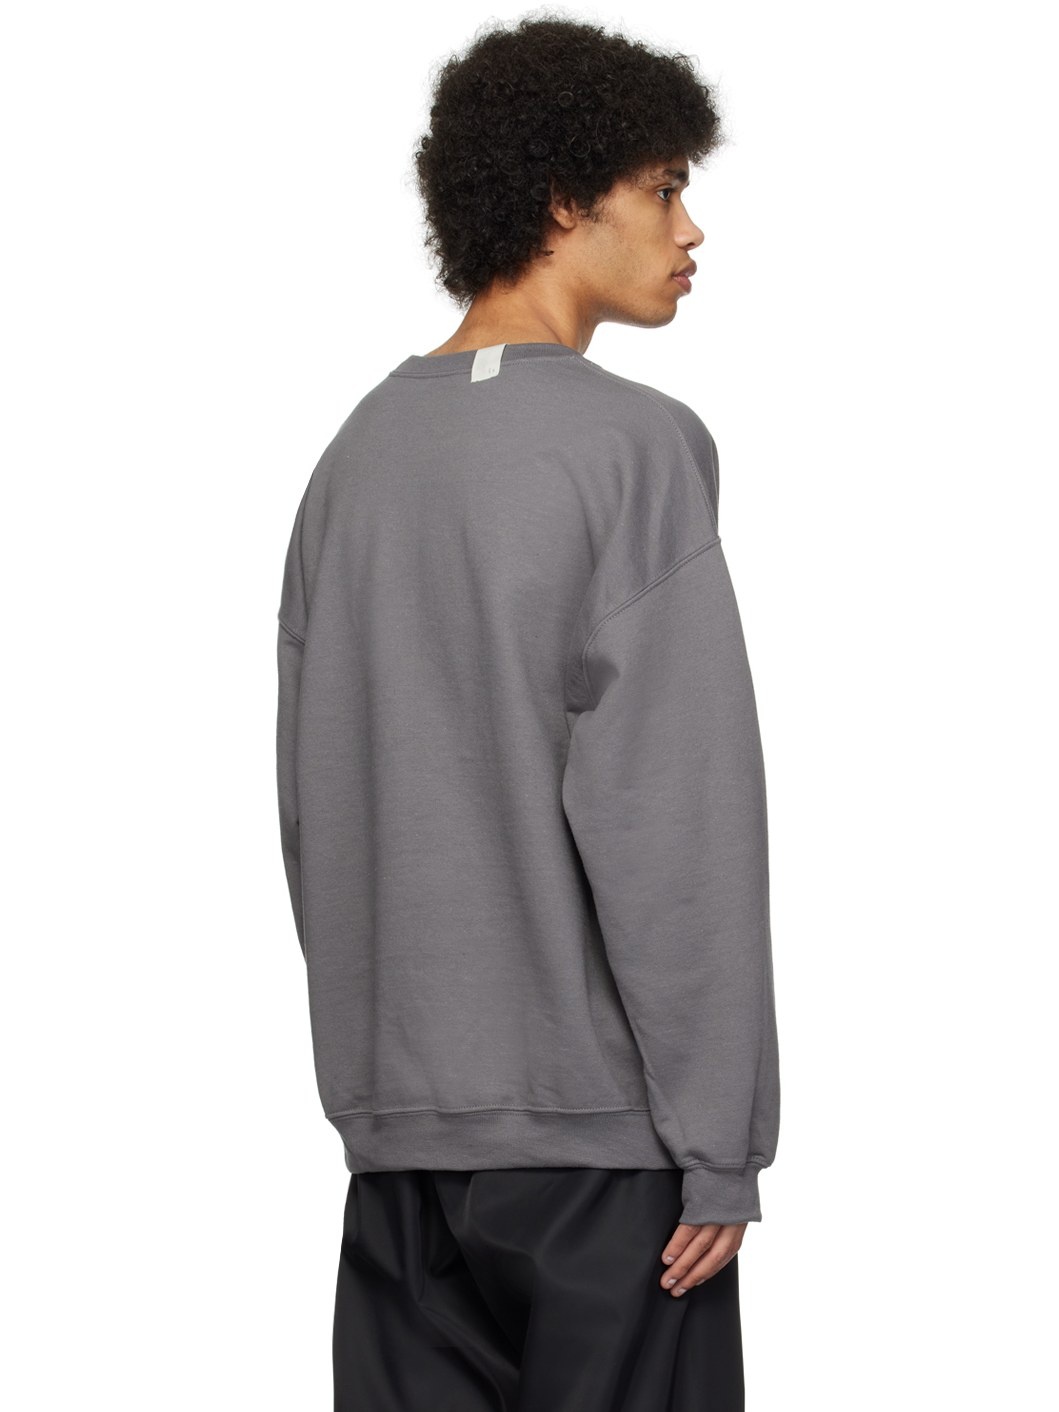 Gray Patch Sweatshirt - 3